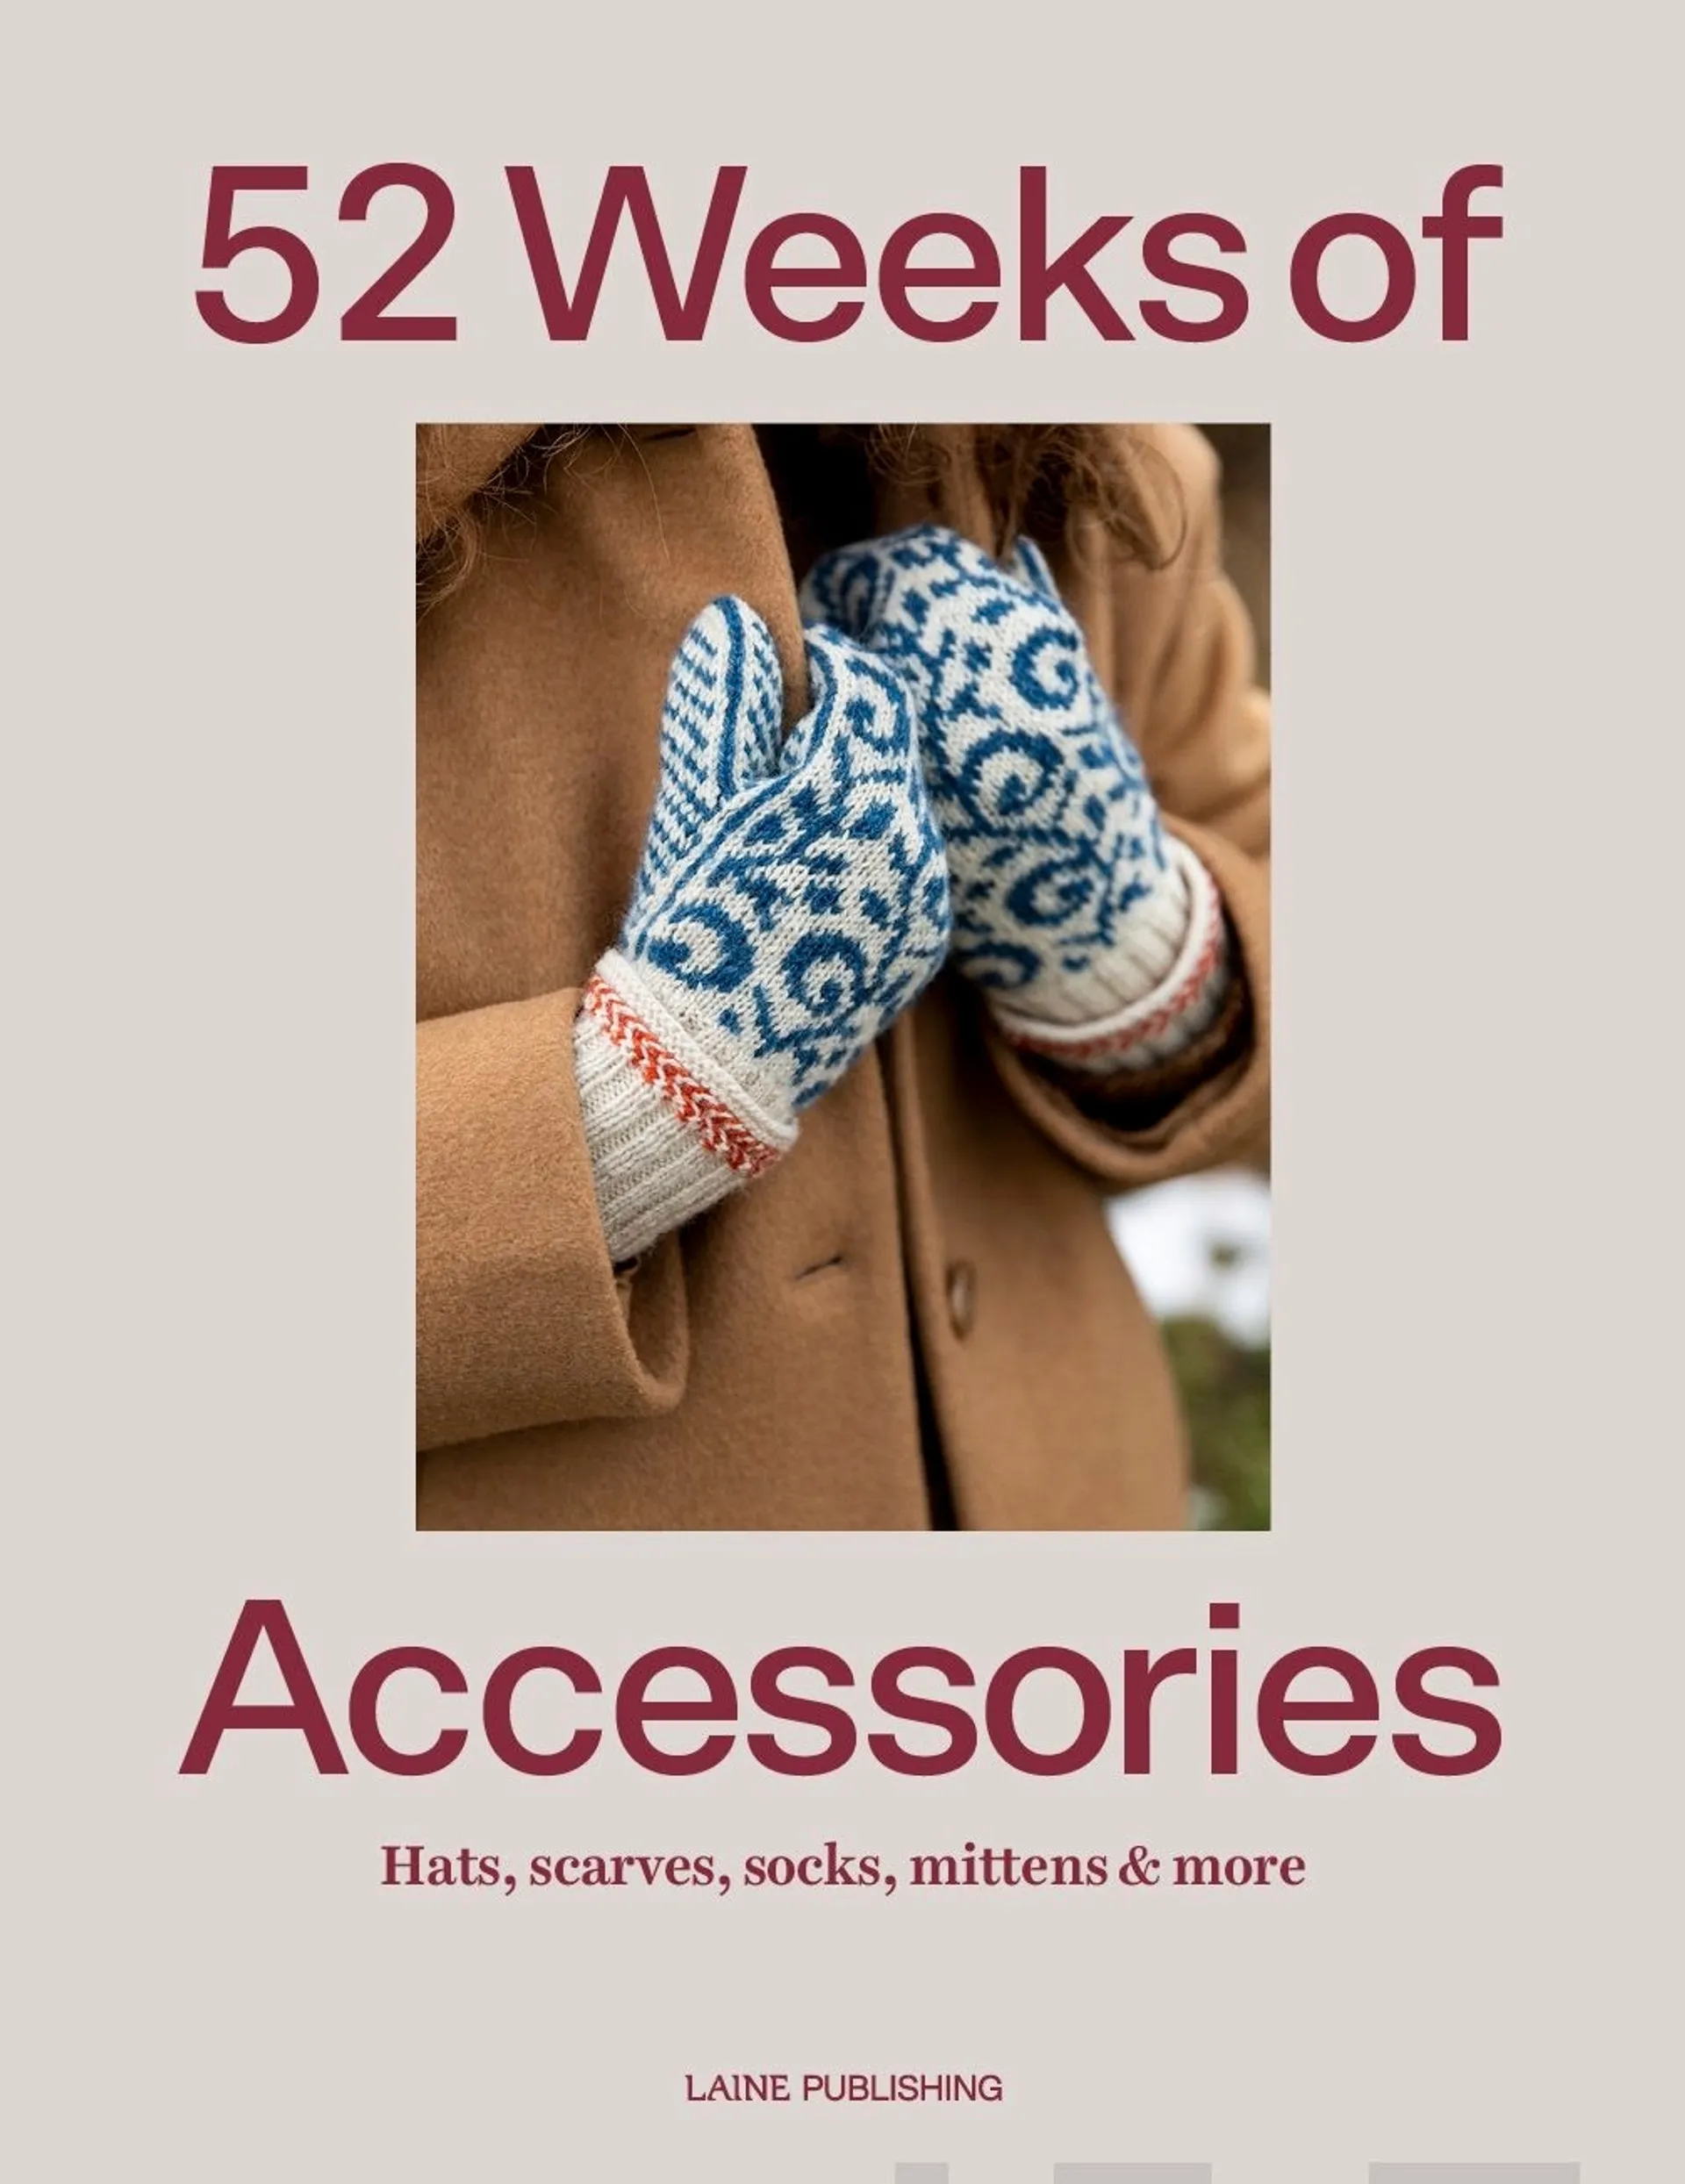 52 Weeks of Accessories - Hats, scarves, socks, mittens & more